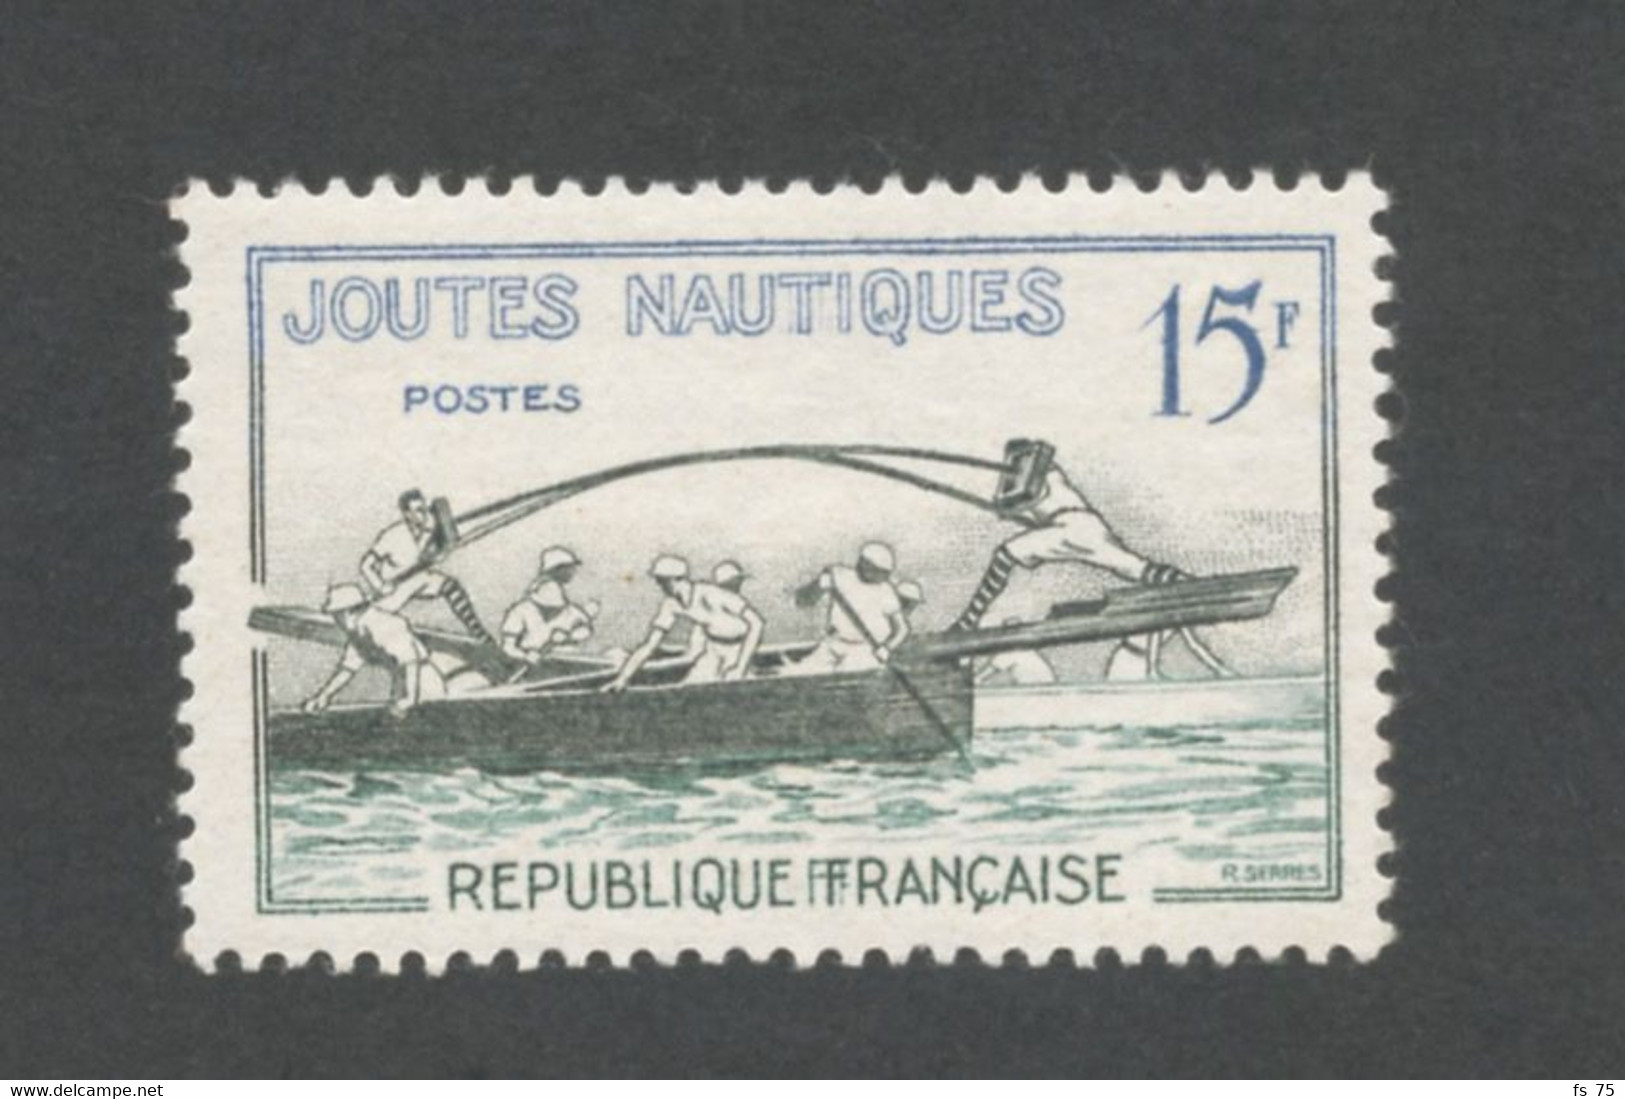 FRANCE - N°1162  15F JOUTES NAUTIQUES - DOUBLE F A FRANCAISE - NEUF SANS CHARNIERE - Ungebraucht